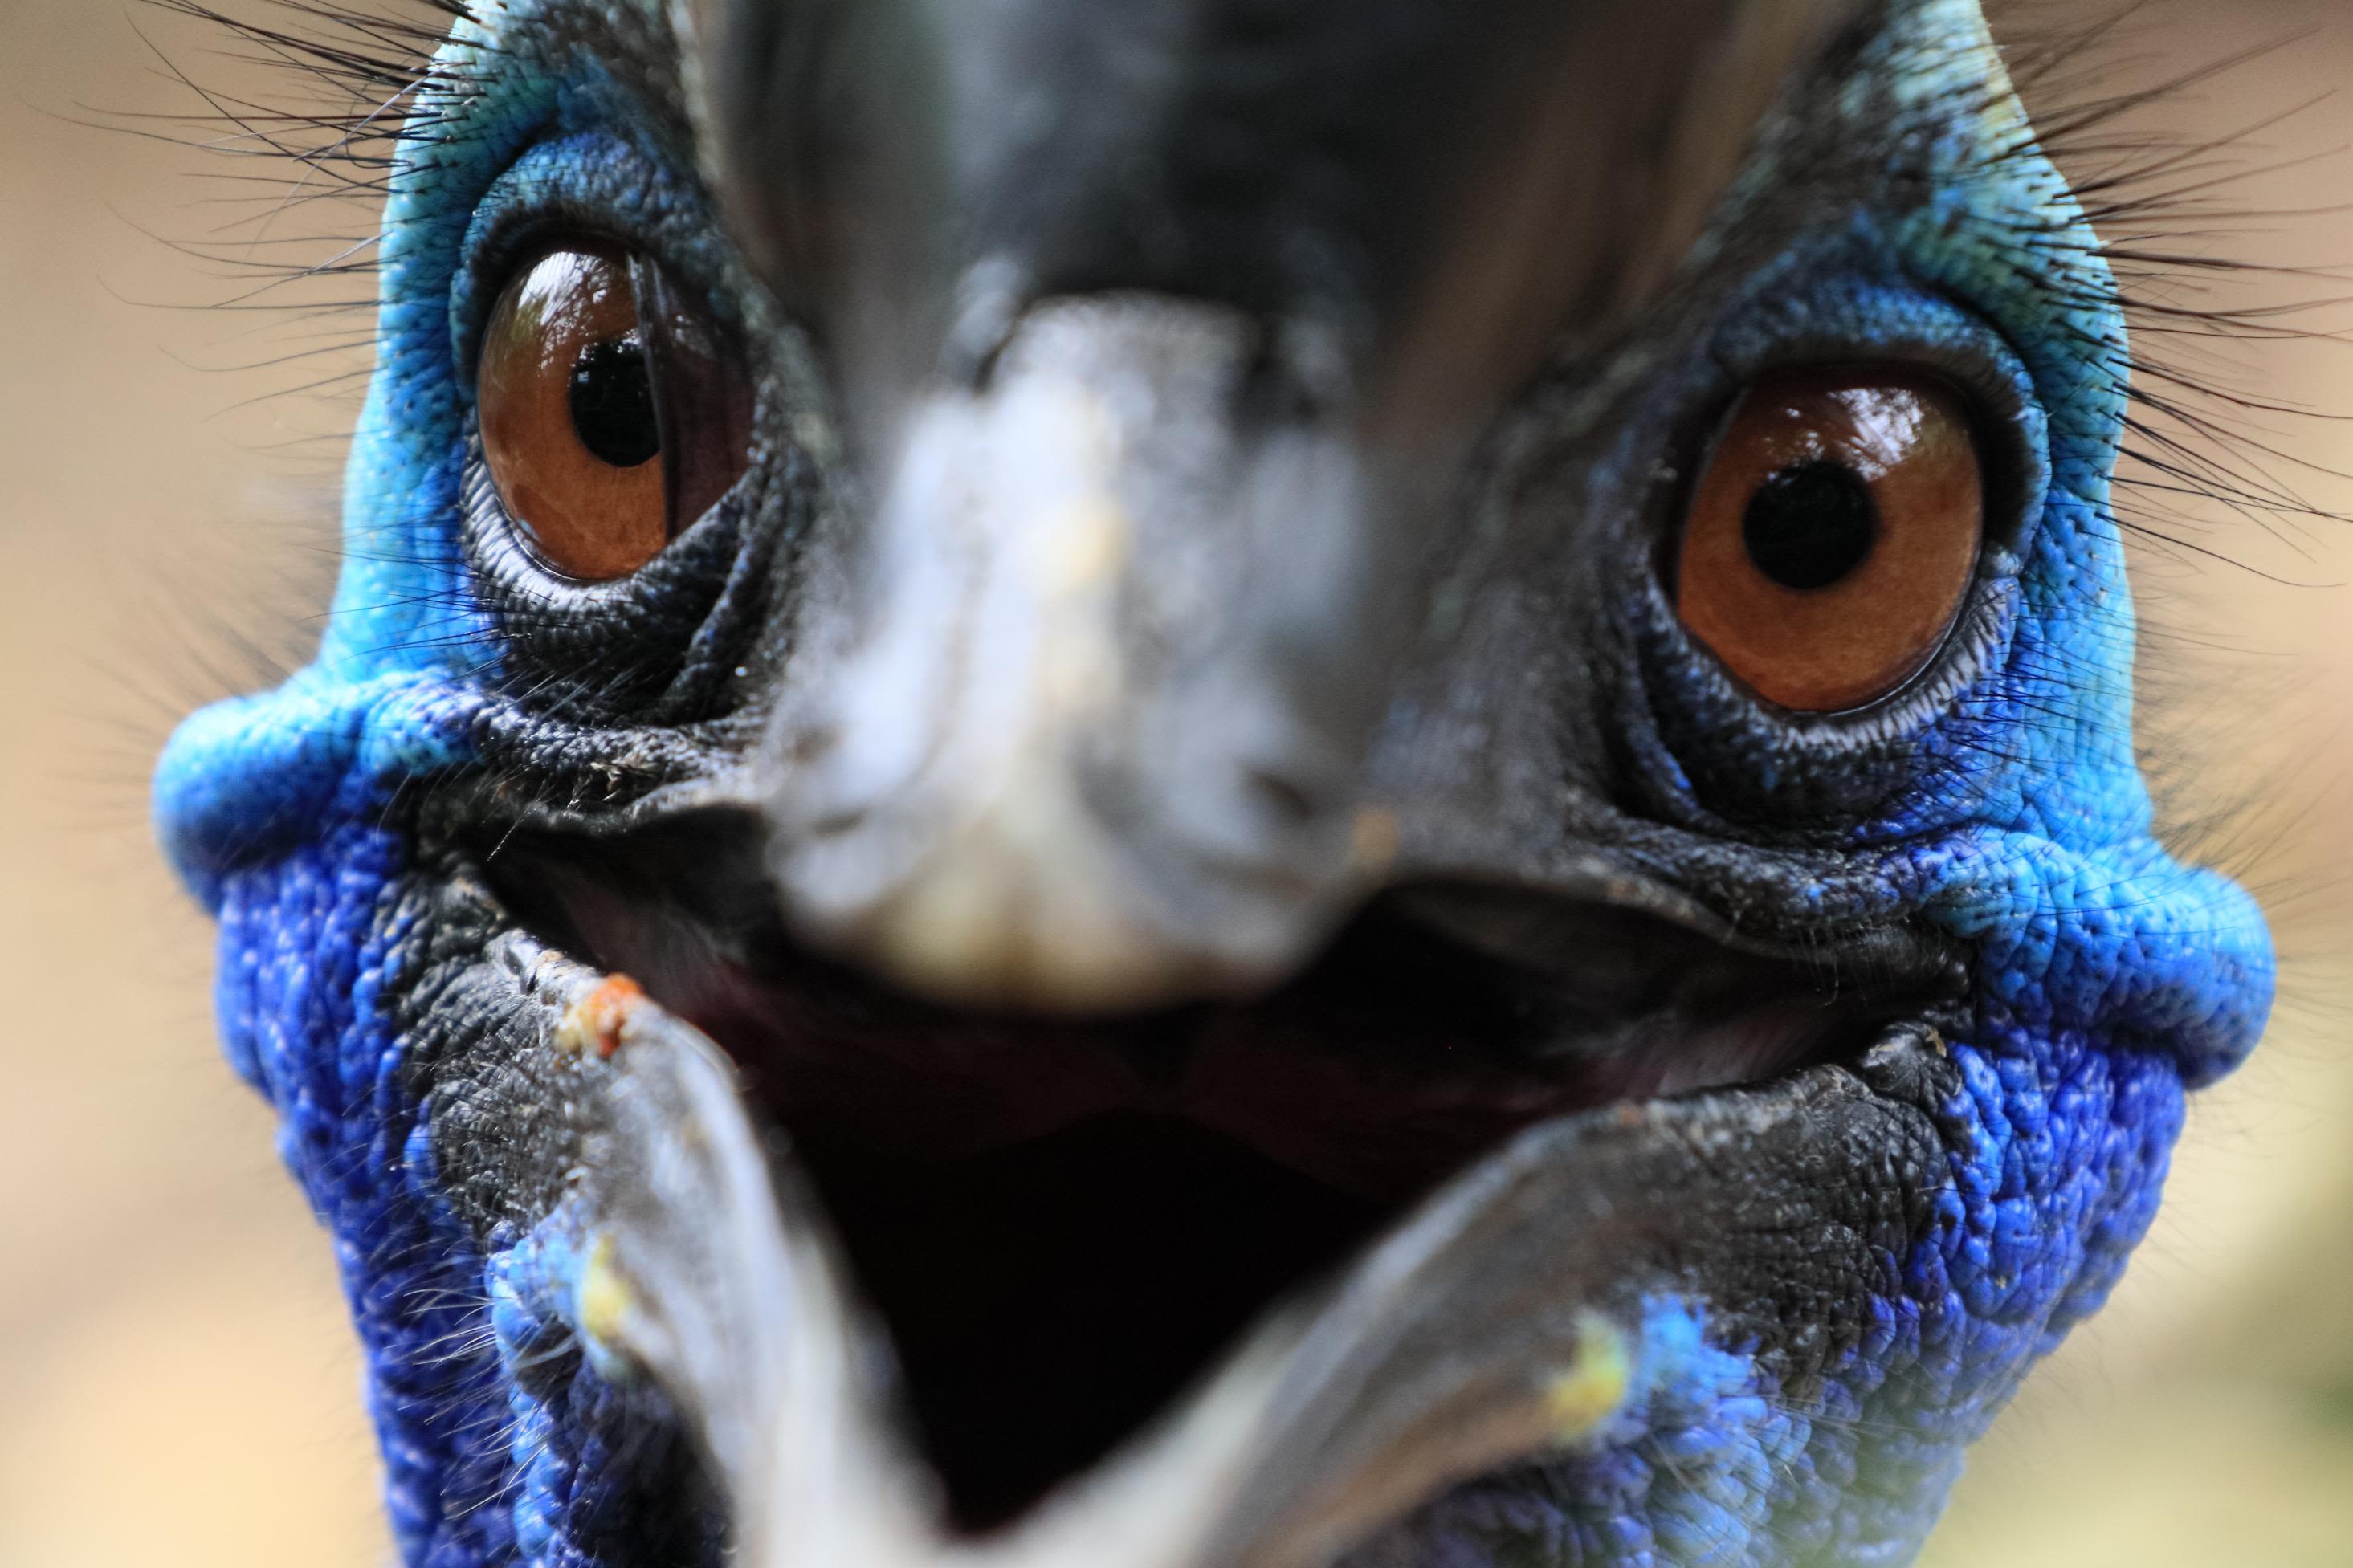 A cassowary, a rare emu-like bird, attacks and kills Florida man, officials say | CNN